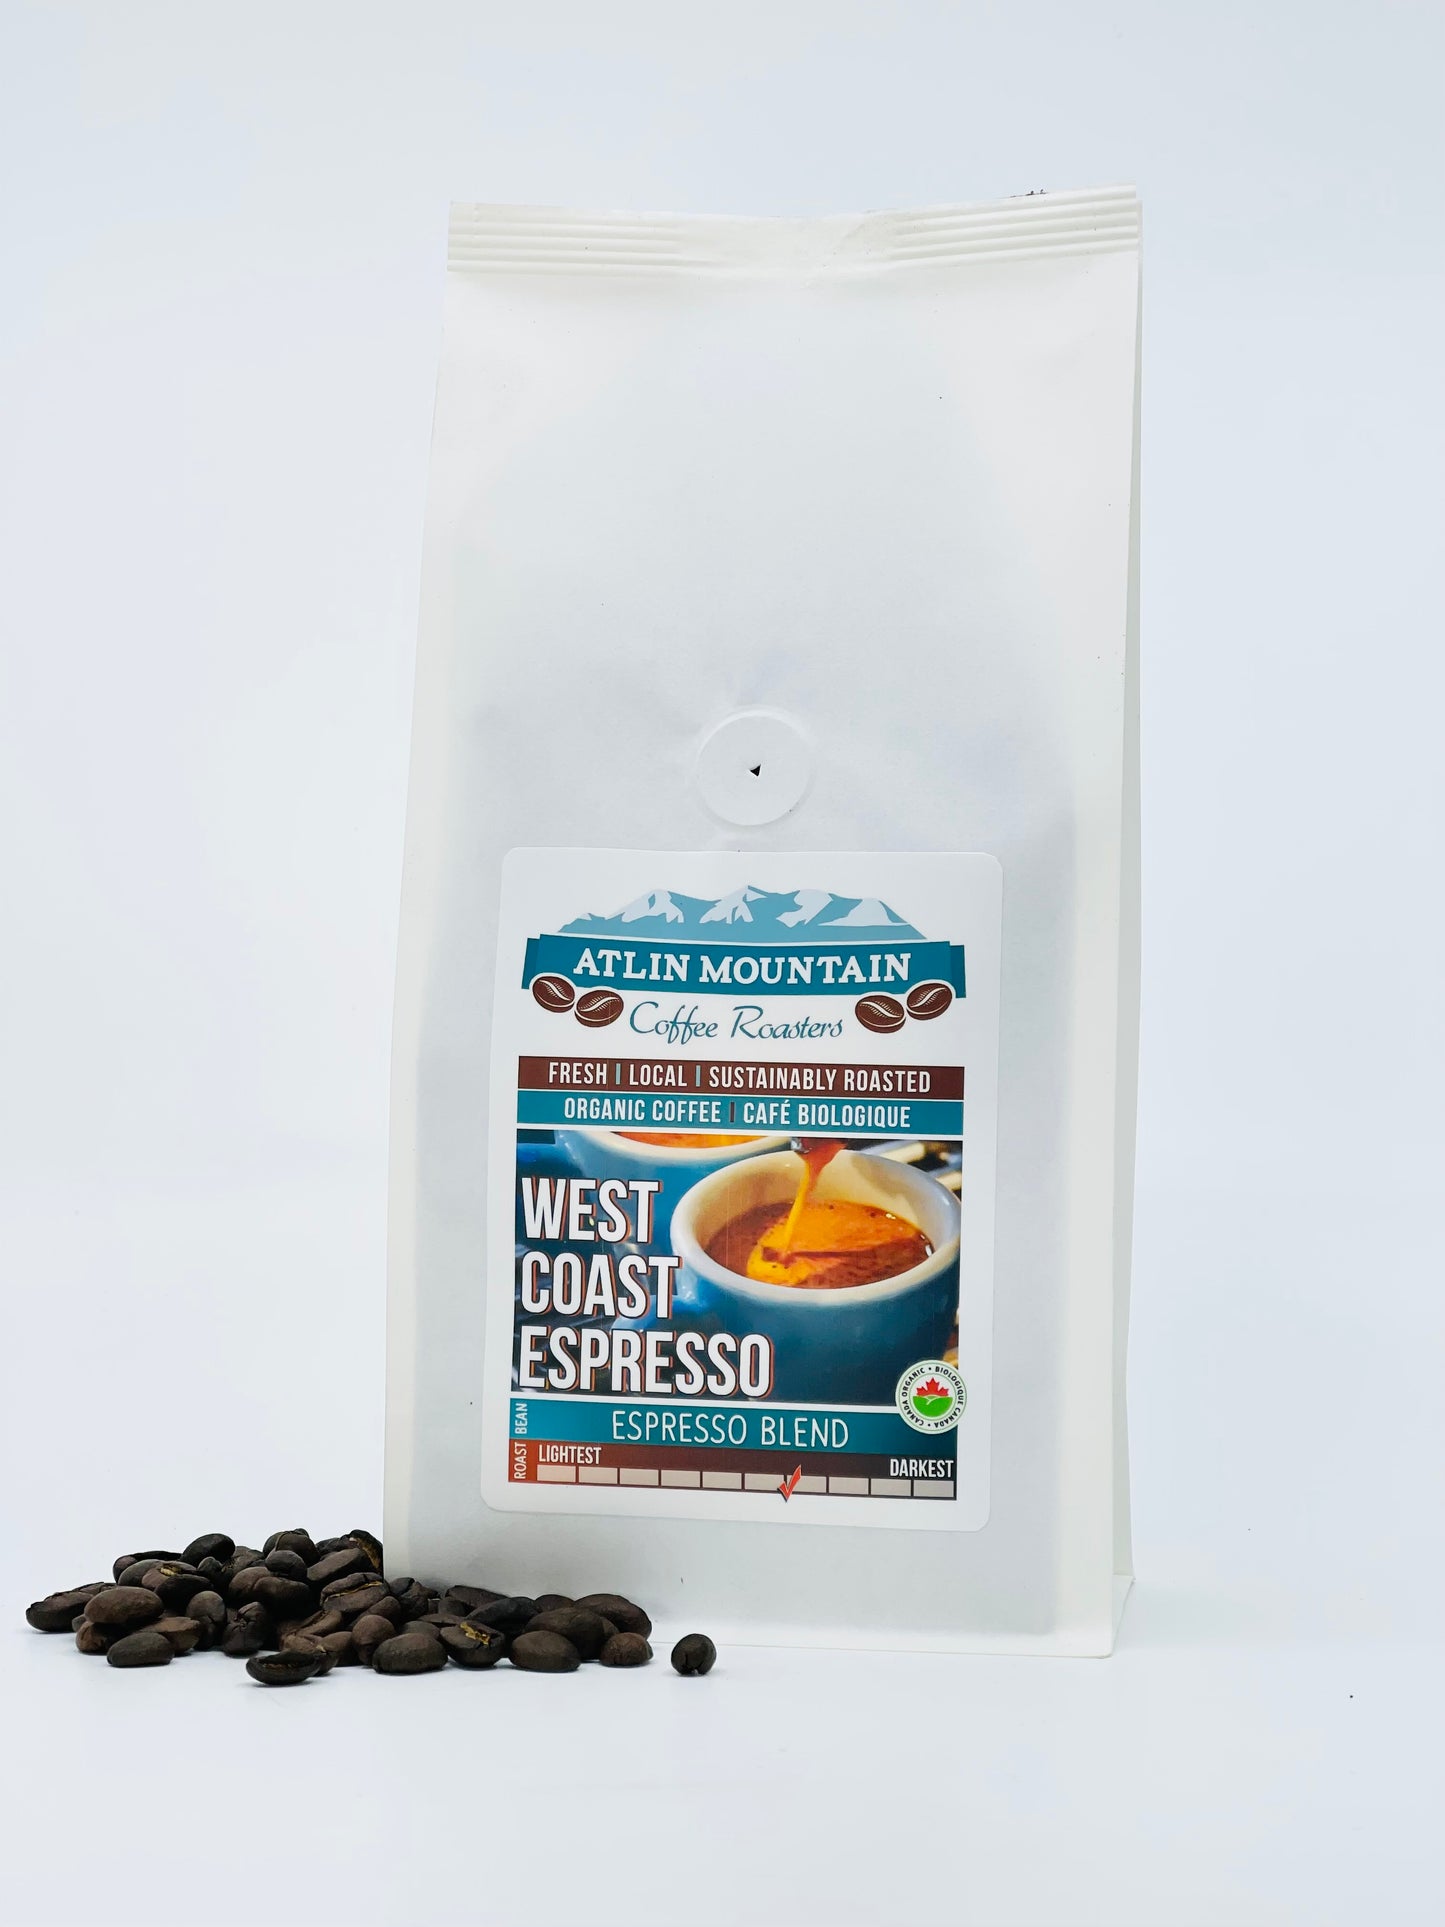 West Coast Espresso - Espresso blend - Multi-origin - Bold, silky bodied